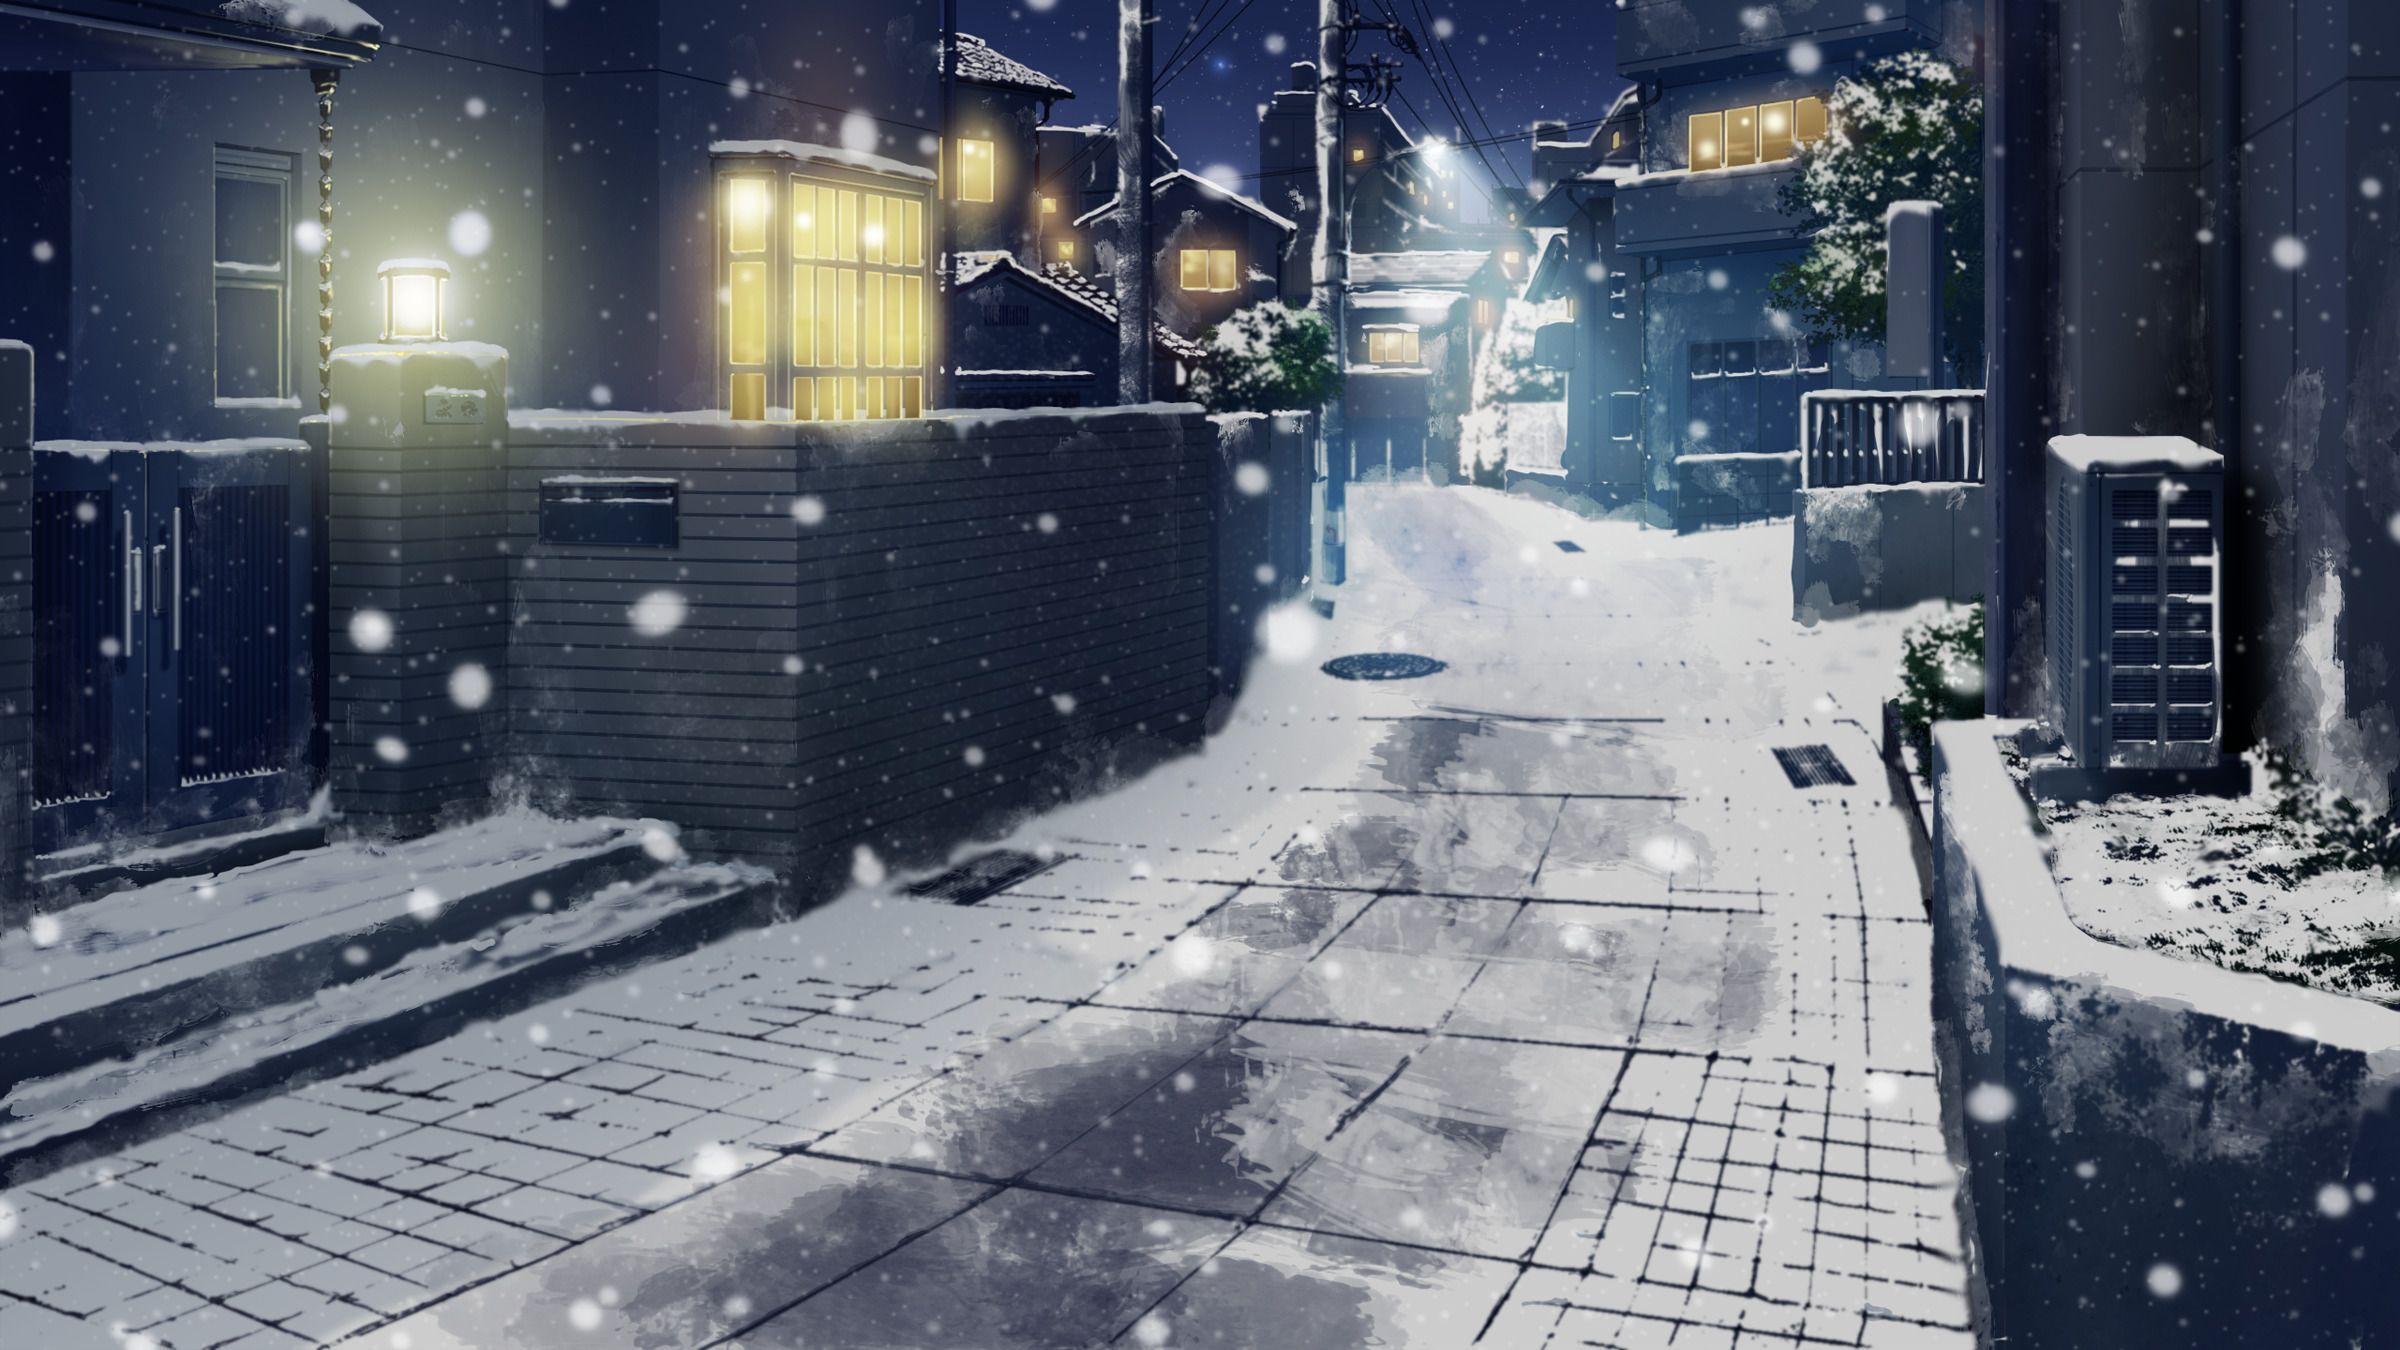 Free download Anime Street Wallpaper [2400x1350] for your Desktop, Mobile & Tablet. Explore Anime Winter City Wallpaper. City Winter Wallpaper, Winter Anime Wallpaper, New York City Winter Wallpaper